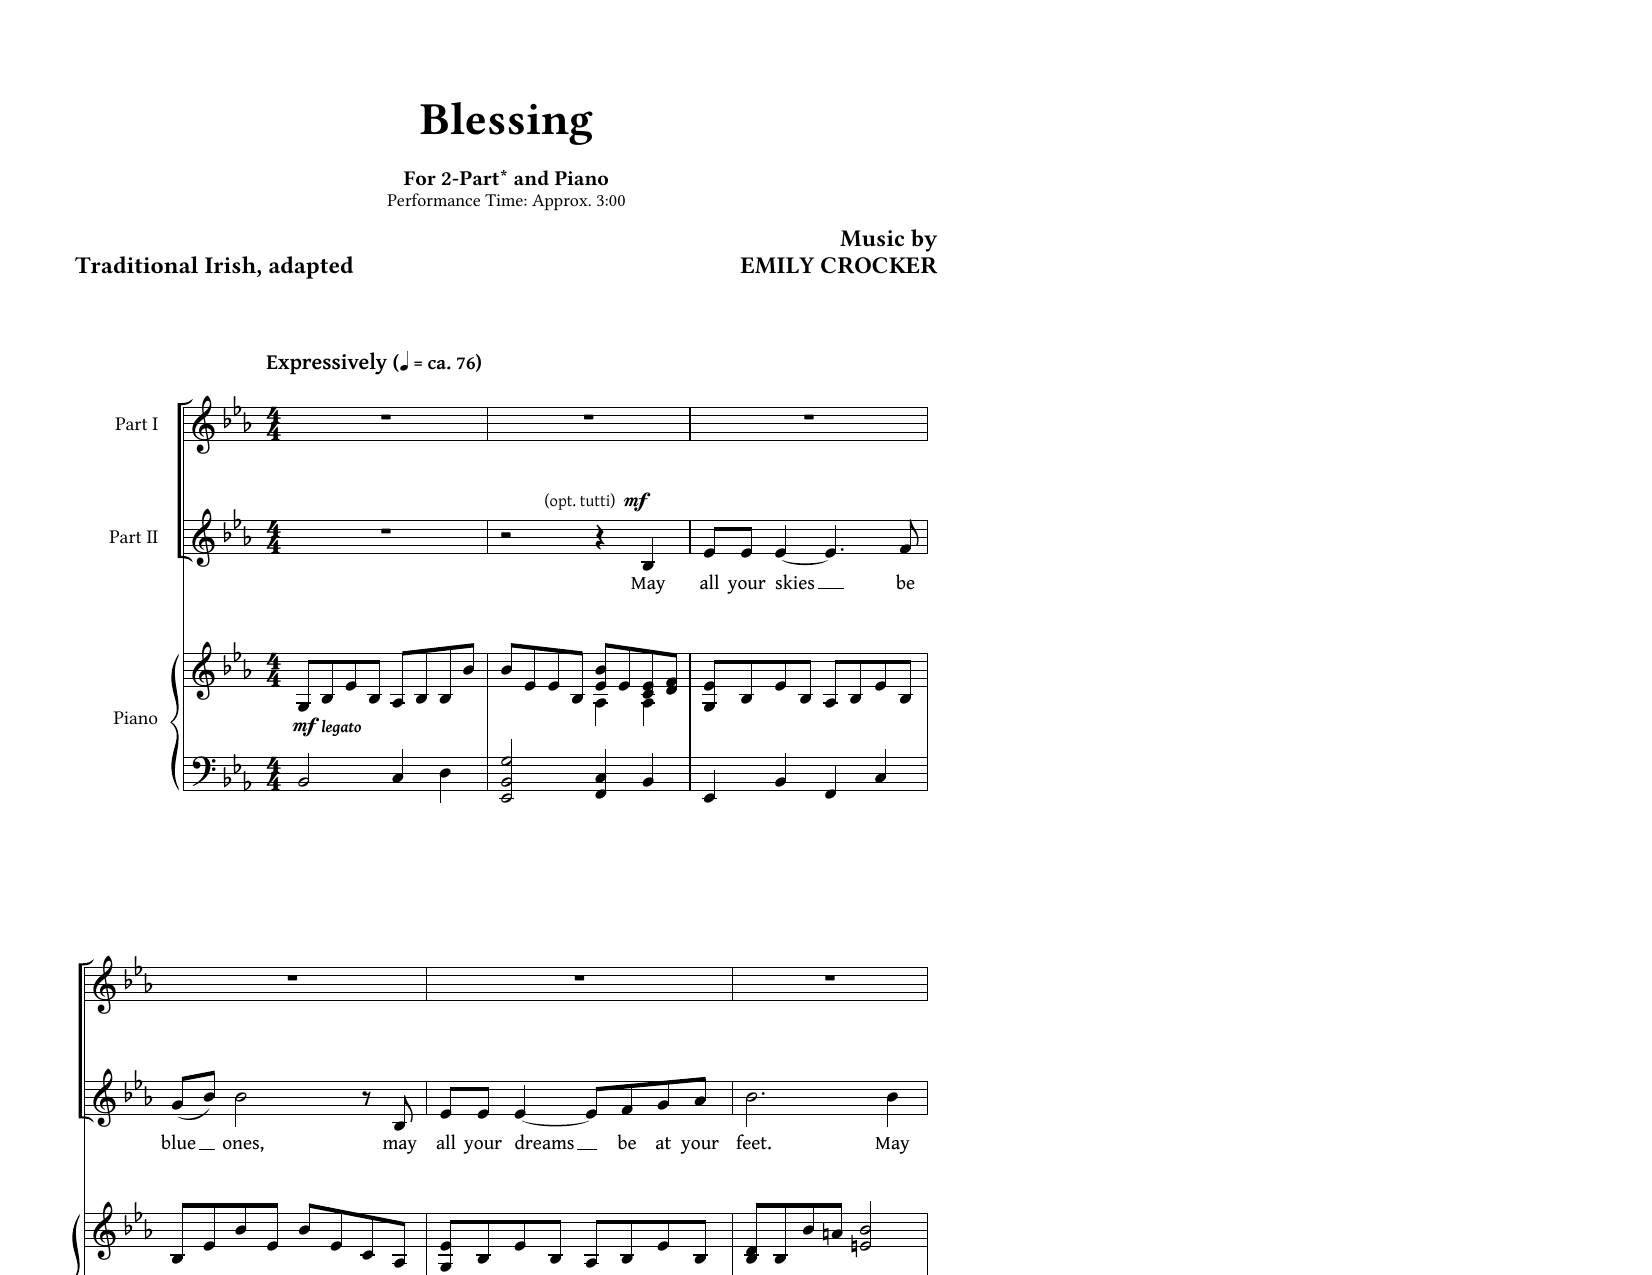 Emily Crocker Blessing Sheet Music Notes & Chords for 2-Part Choir - Download or Print PDF